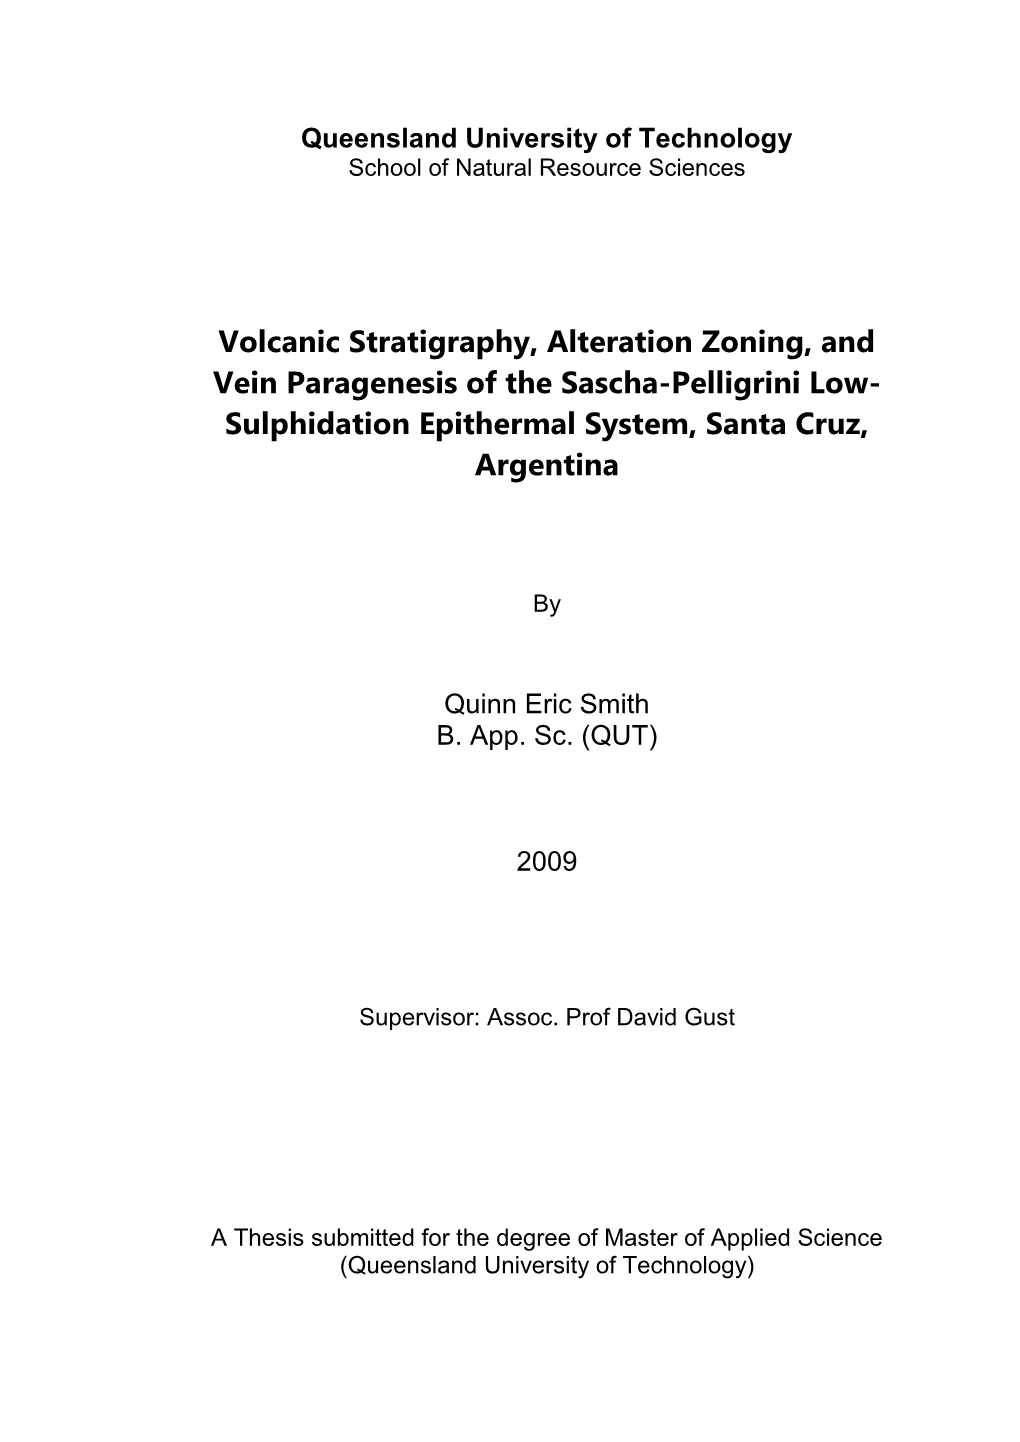 Volcanic Stratigraphy, Alteration Zoning, and Vein Paragenesis of the Sascha-Pelligrini Low- Sulphidation Epithermal System, Santa Cruz, Argentina